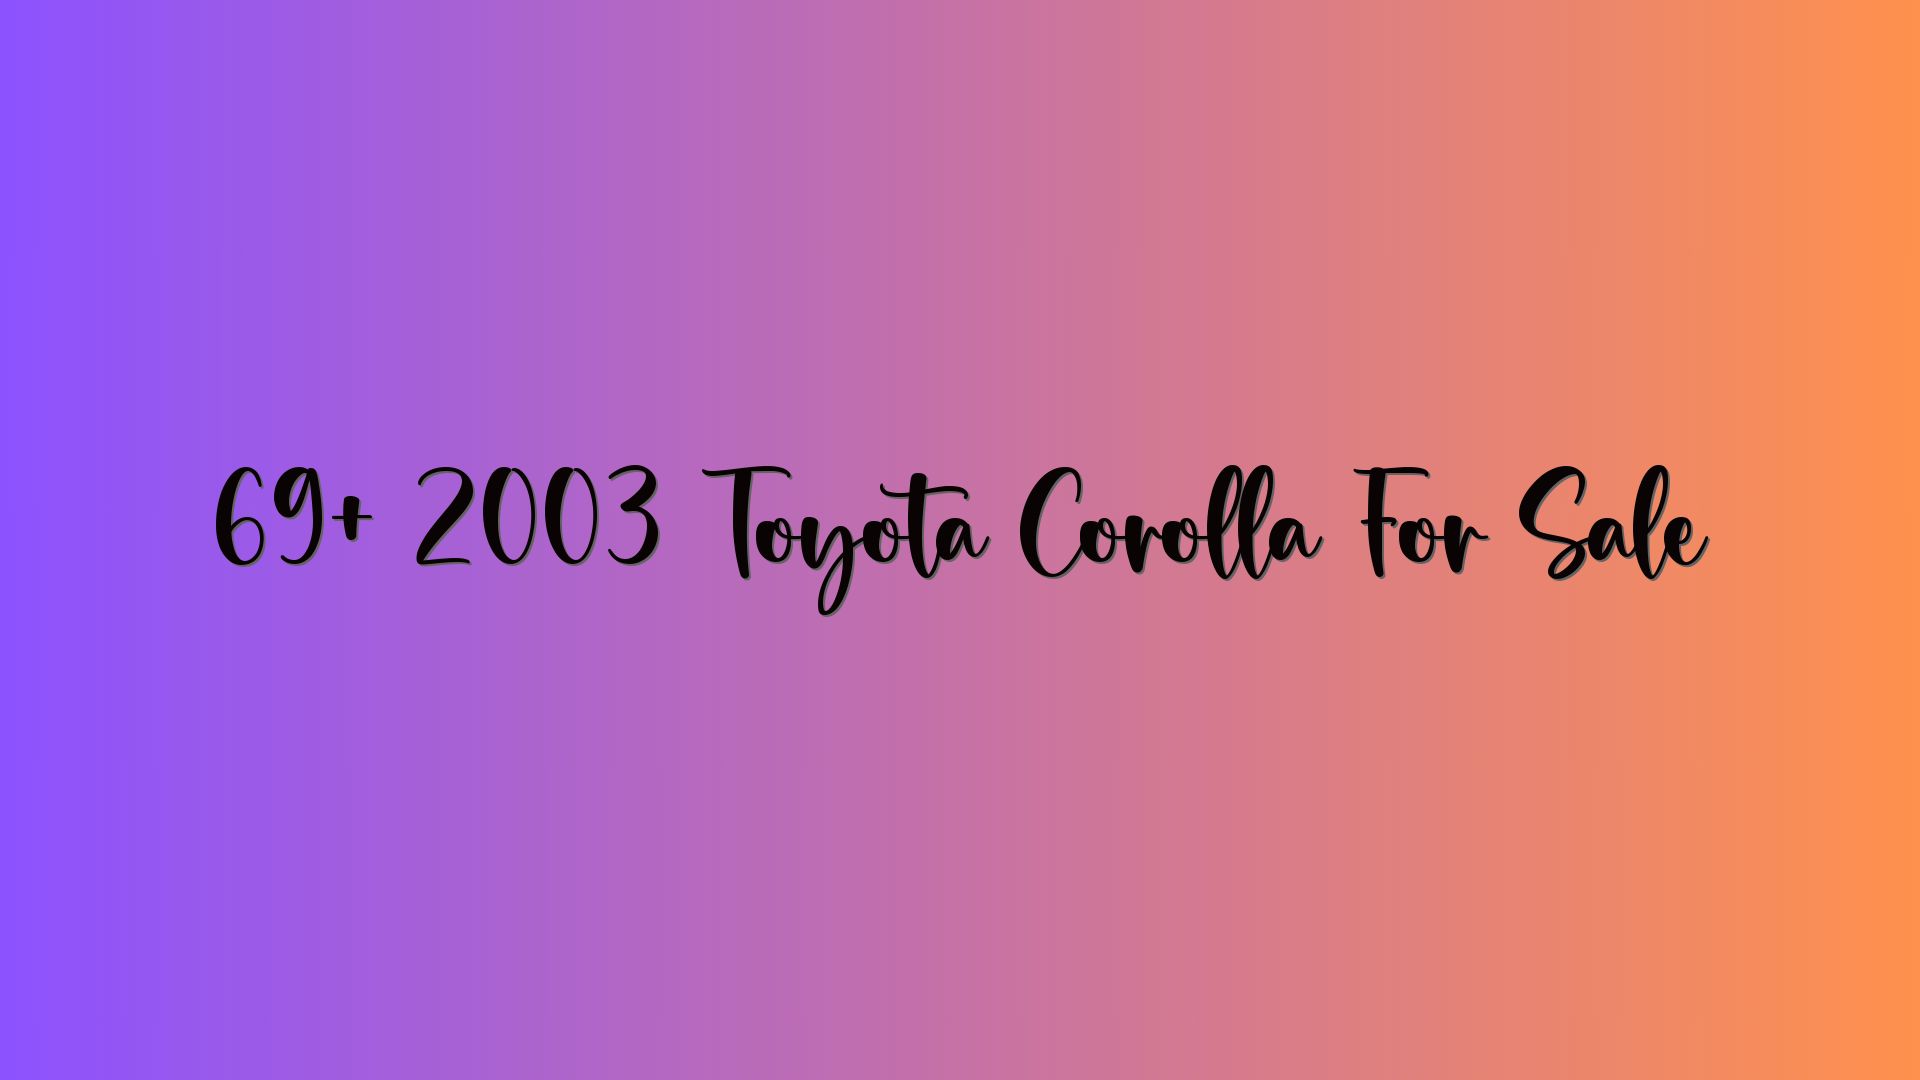 69+ 2003 Toyota Corolla For Sale